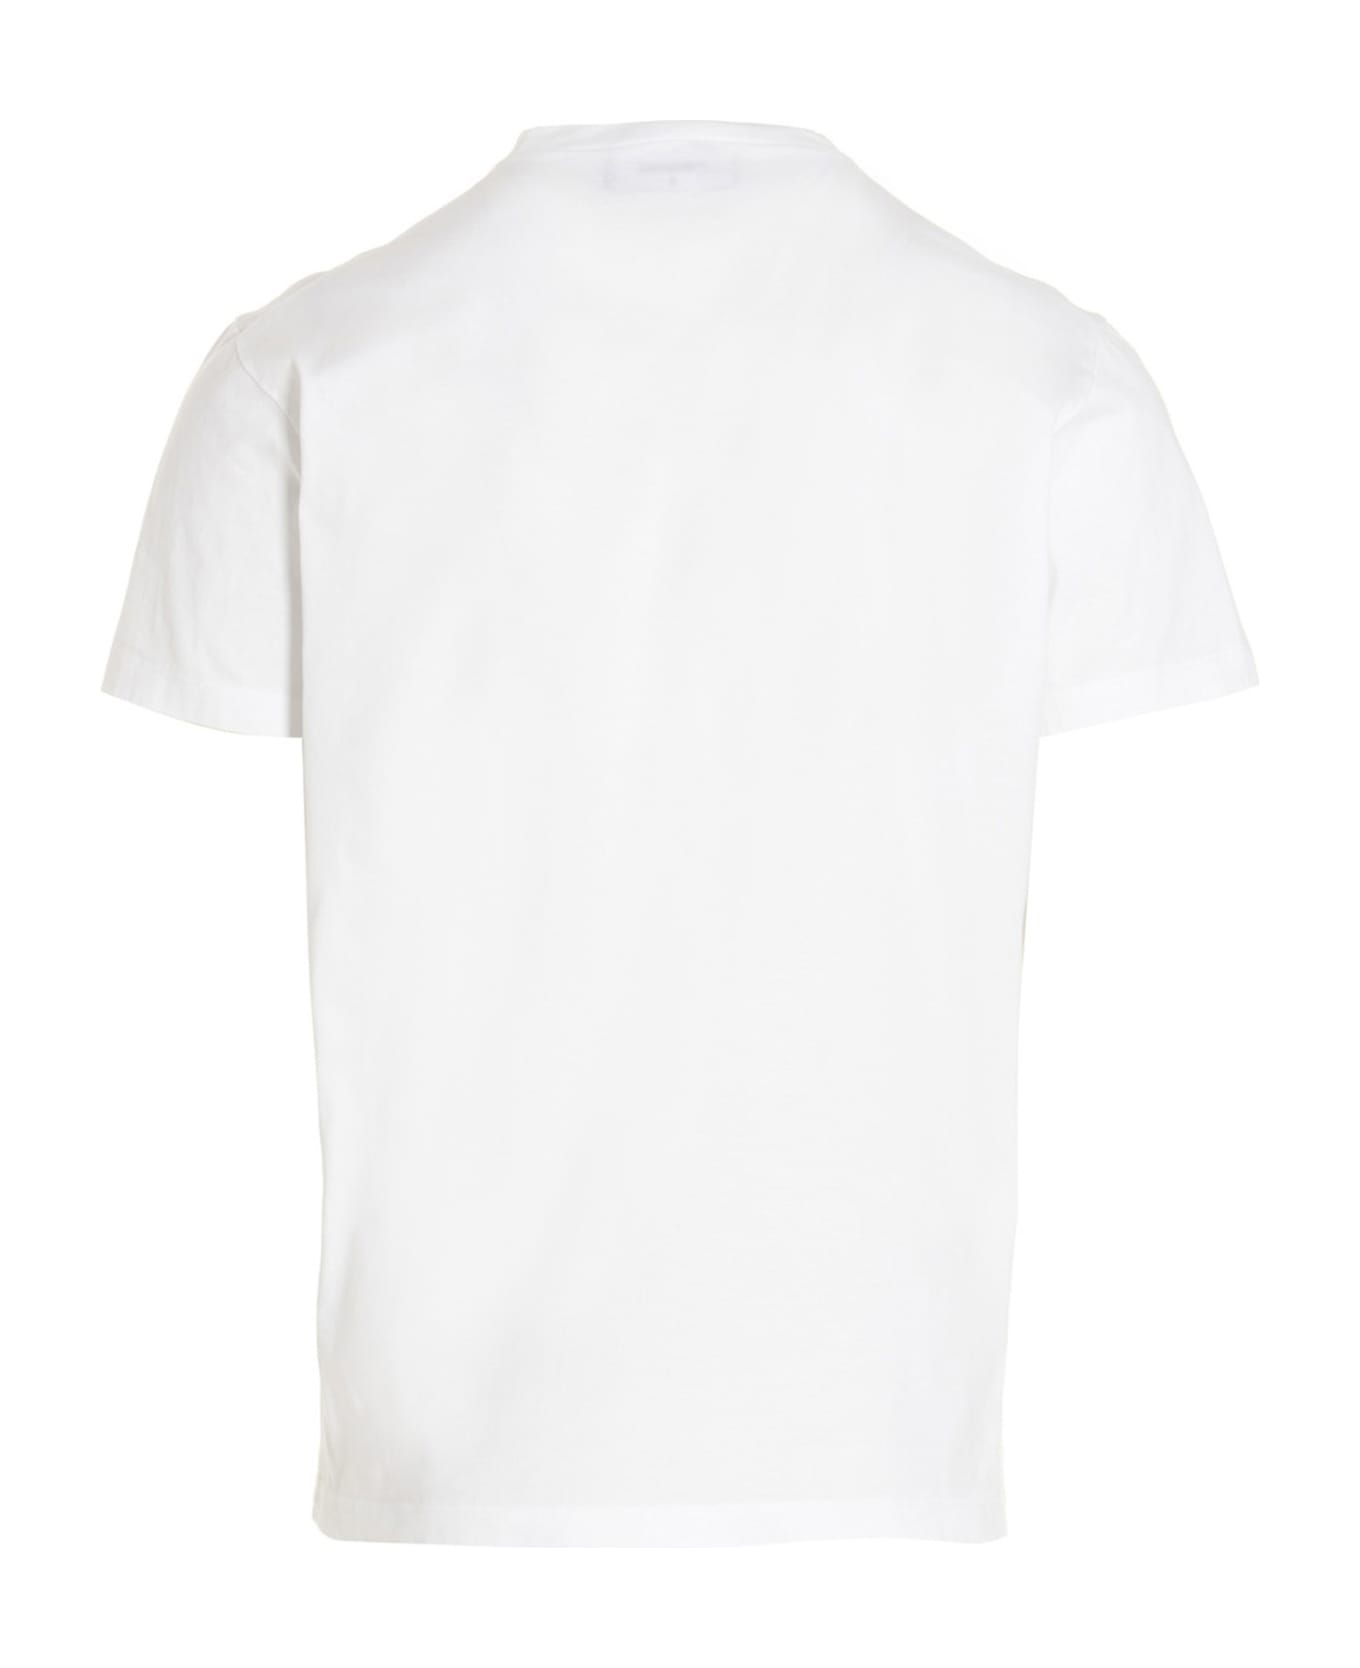 Dsquared2 'mountain  T-shirt - White